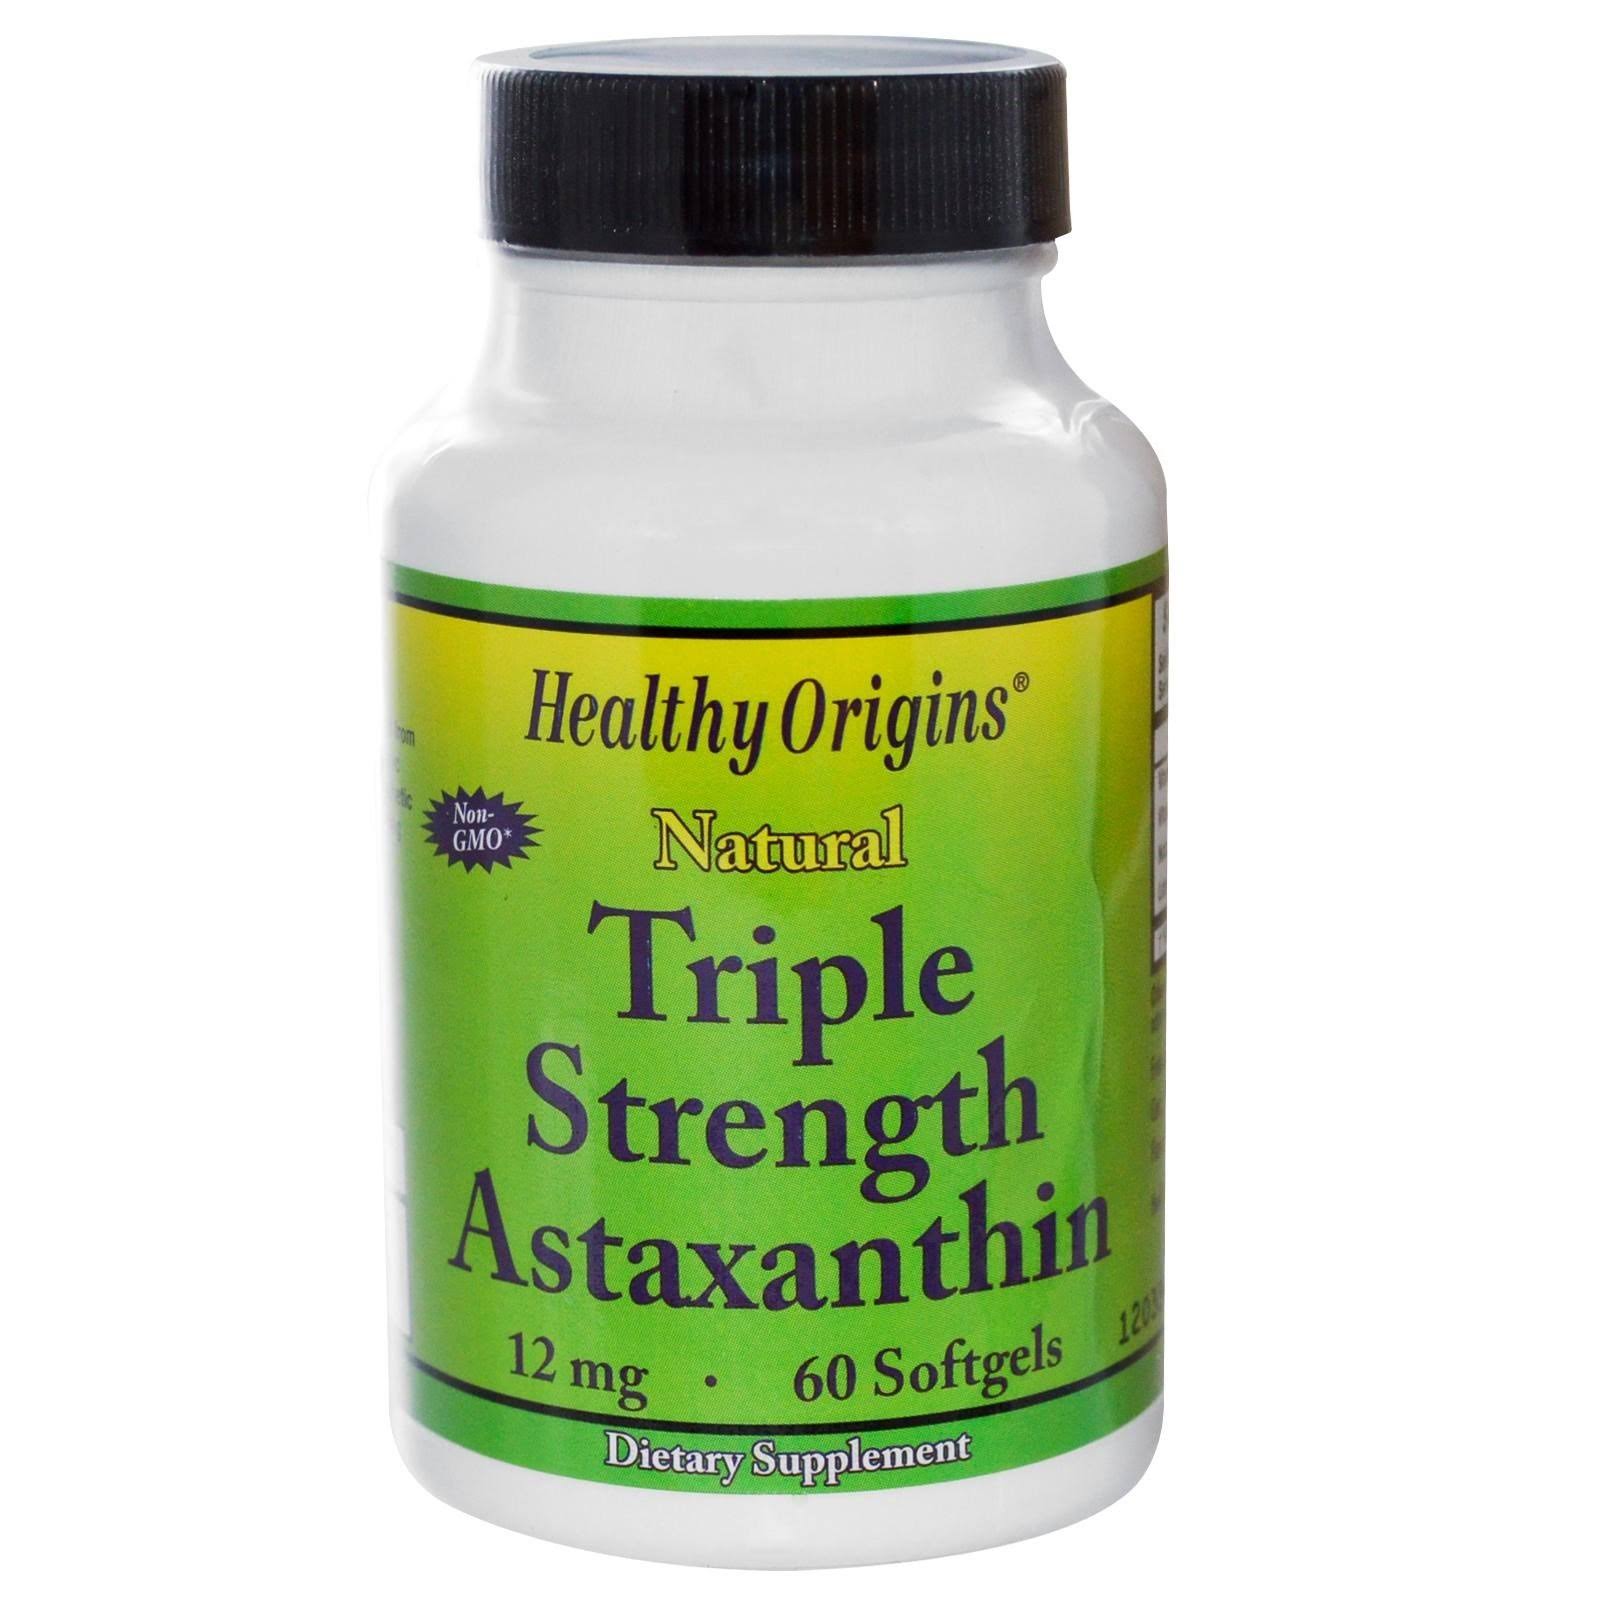 Healthy Origins Natural Triple Strength Astaxanthin - 60 Softgels